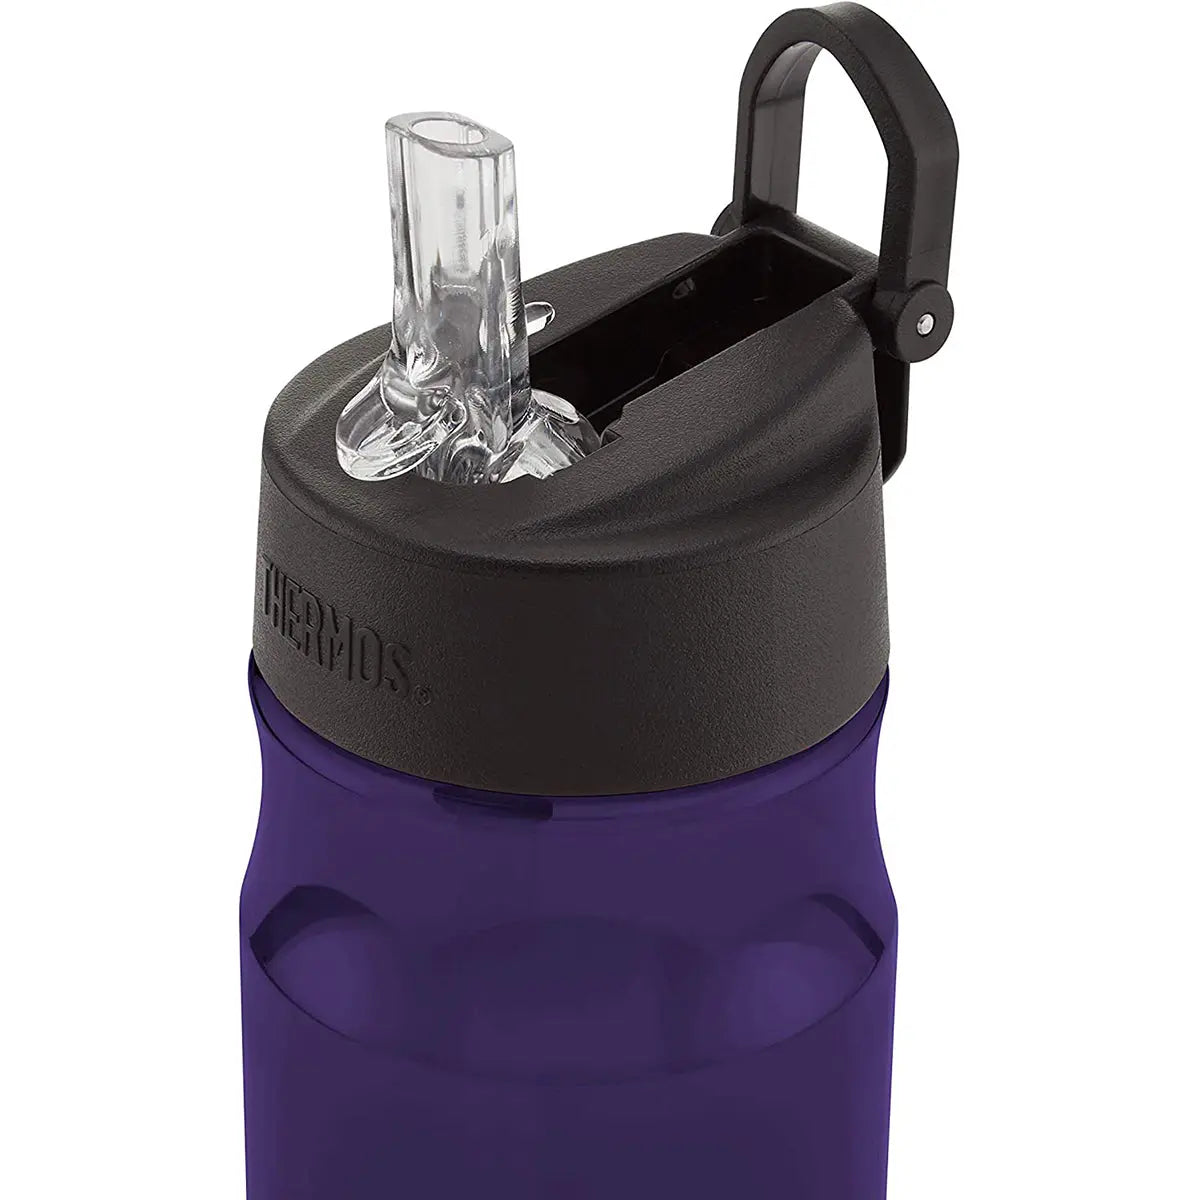 Thermos 18 oz. Tritan Hydration Bottle with Straw Thermos